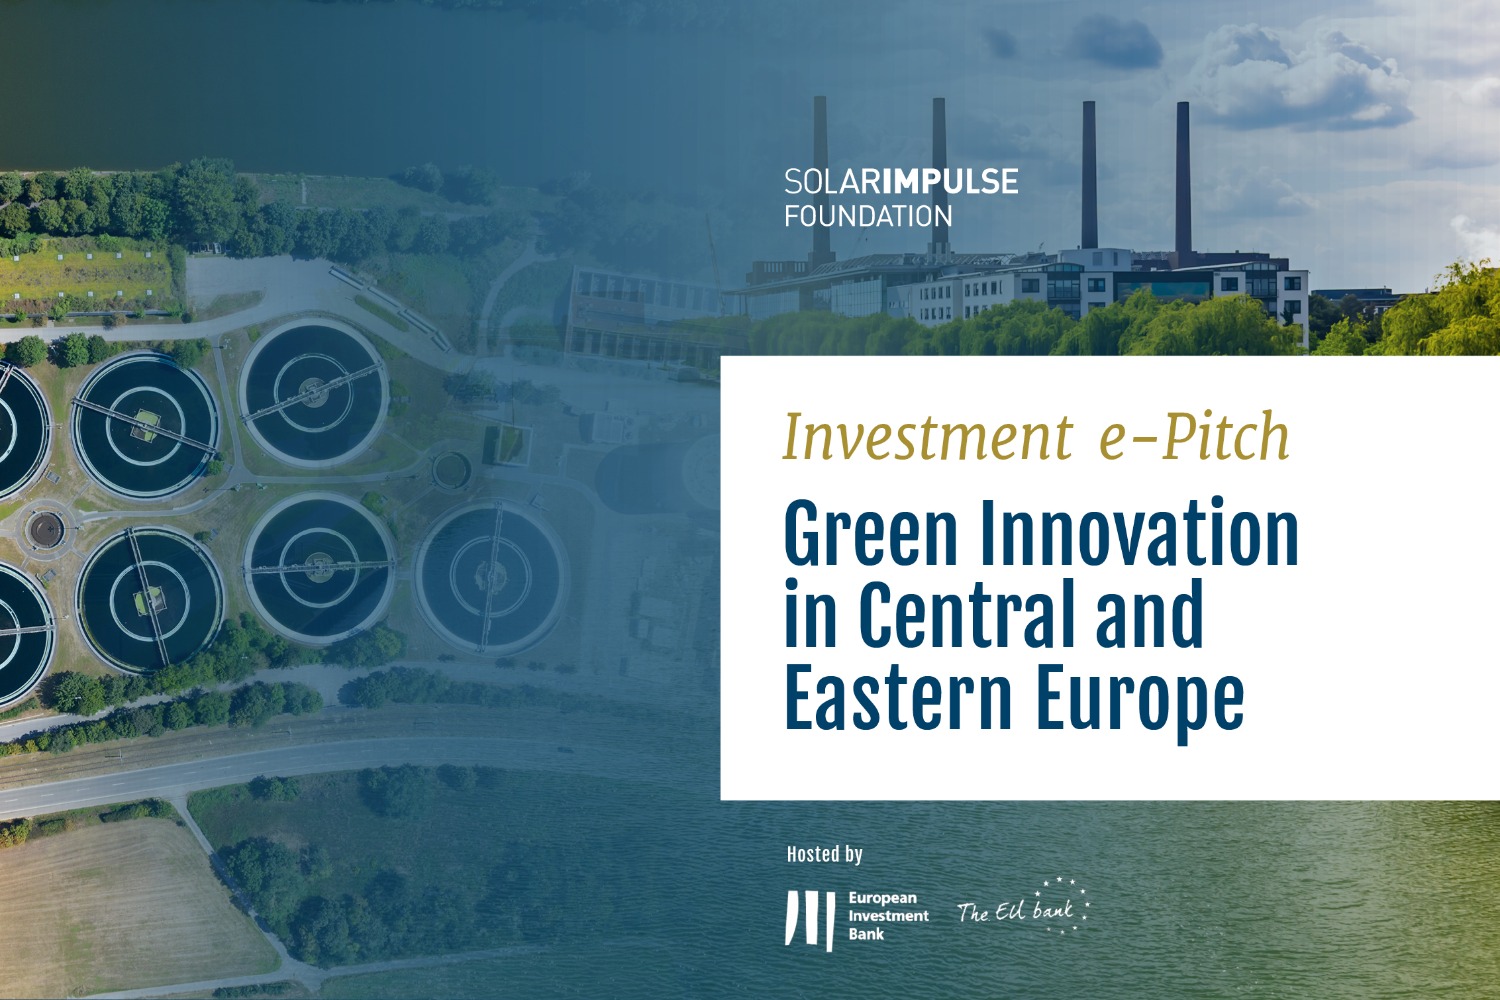 E-Pitch Solar Impulse Investment - acolhido pelo Banco Europeu de Investimento - 2021 